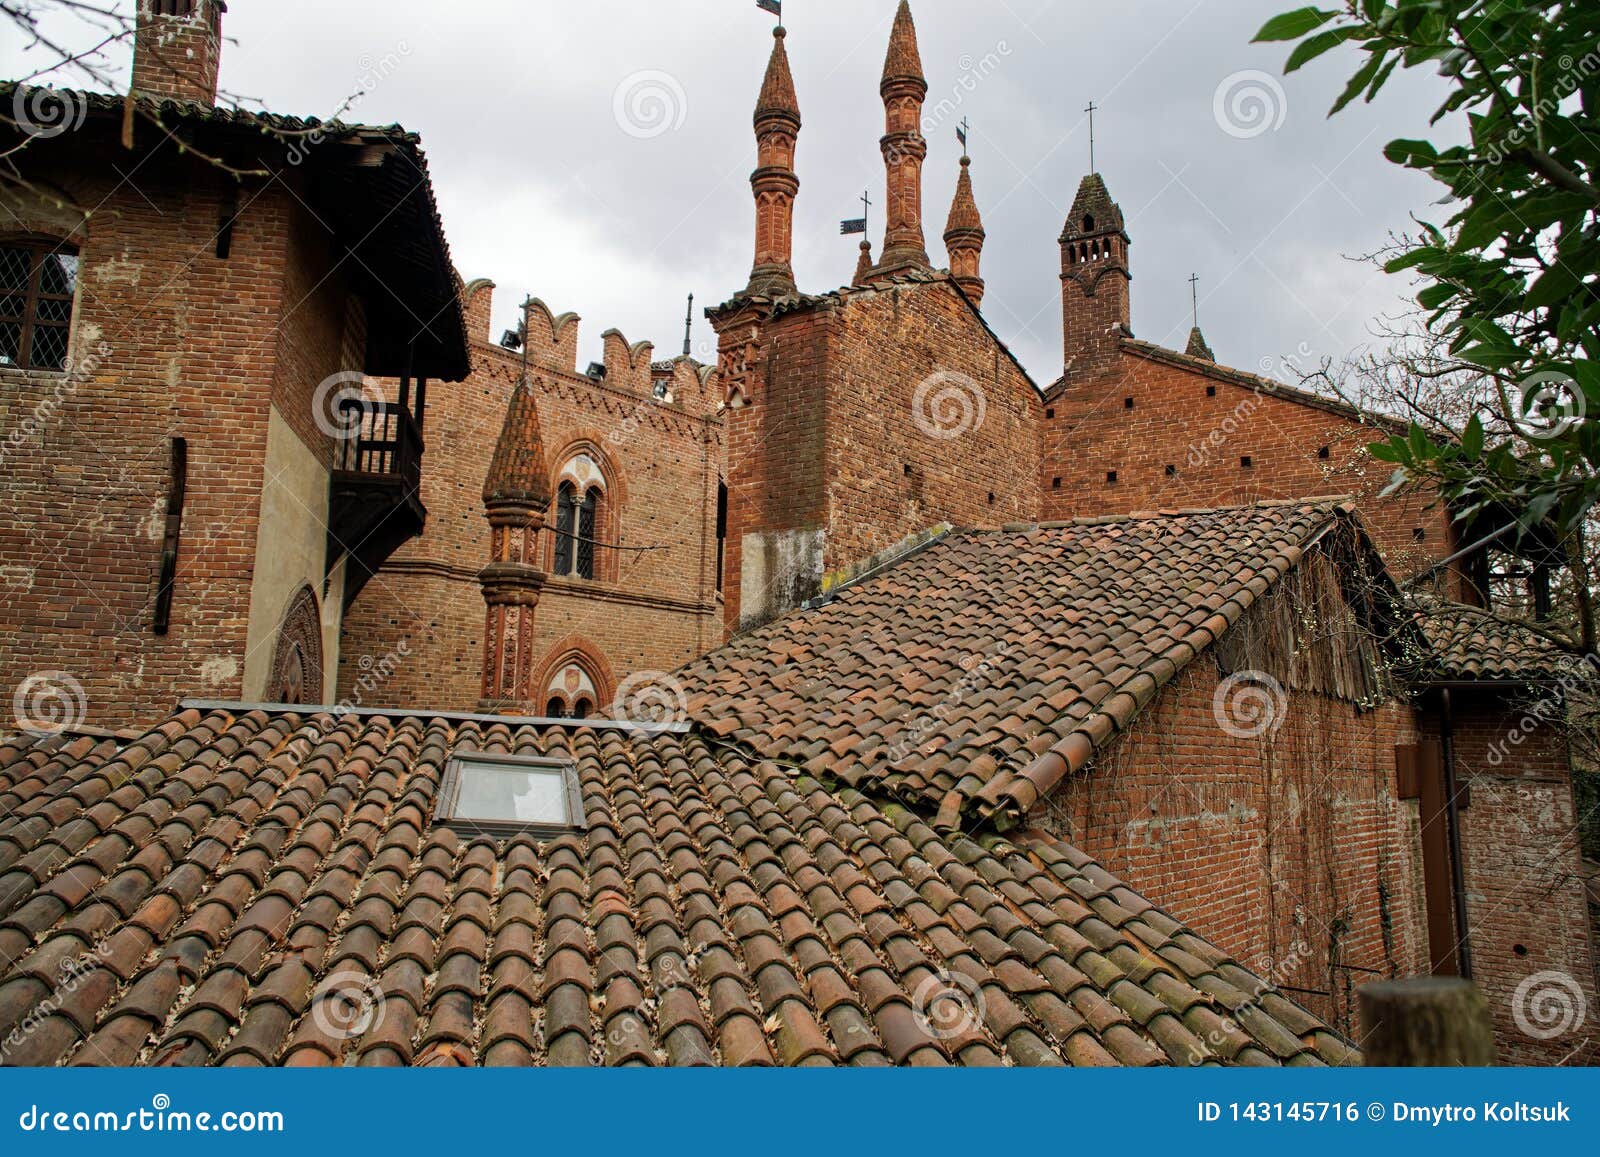 Medieval Castle Roof Tiles Wallpaper